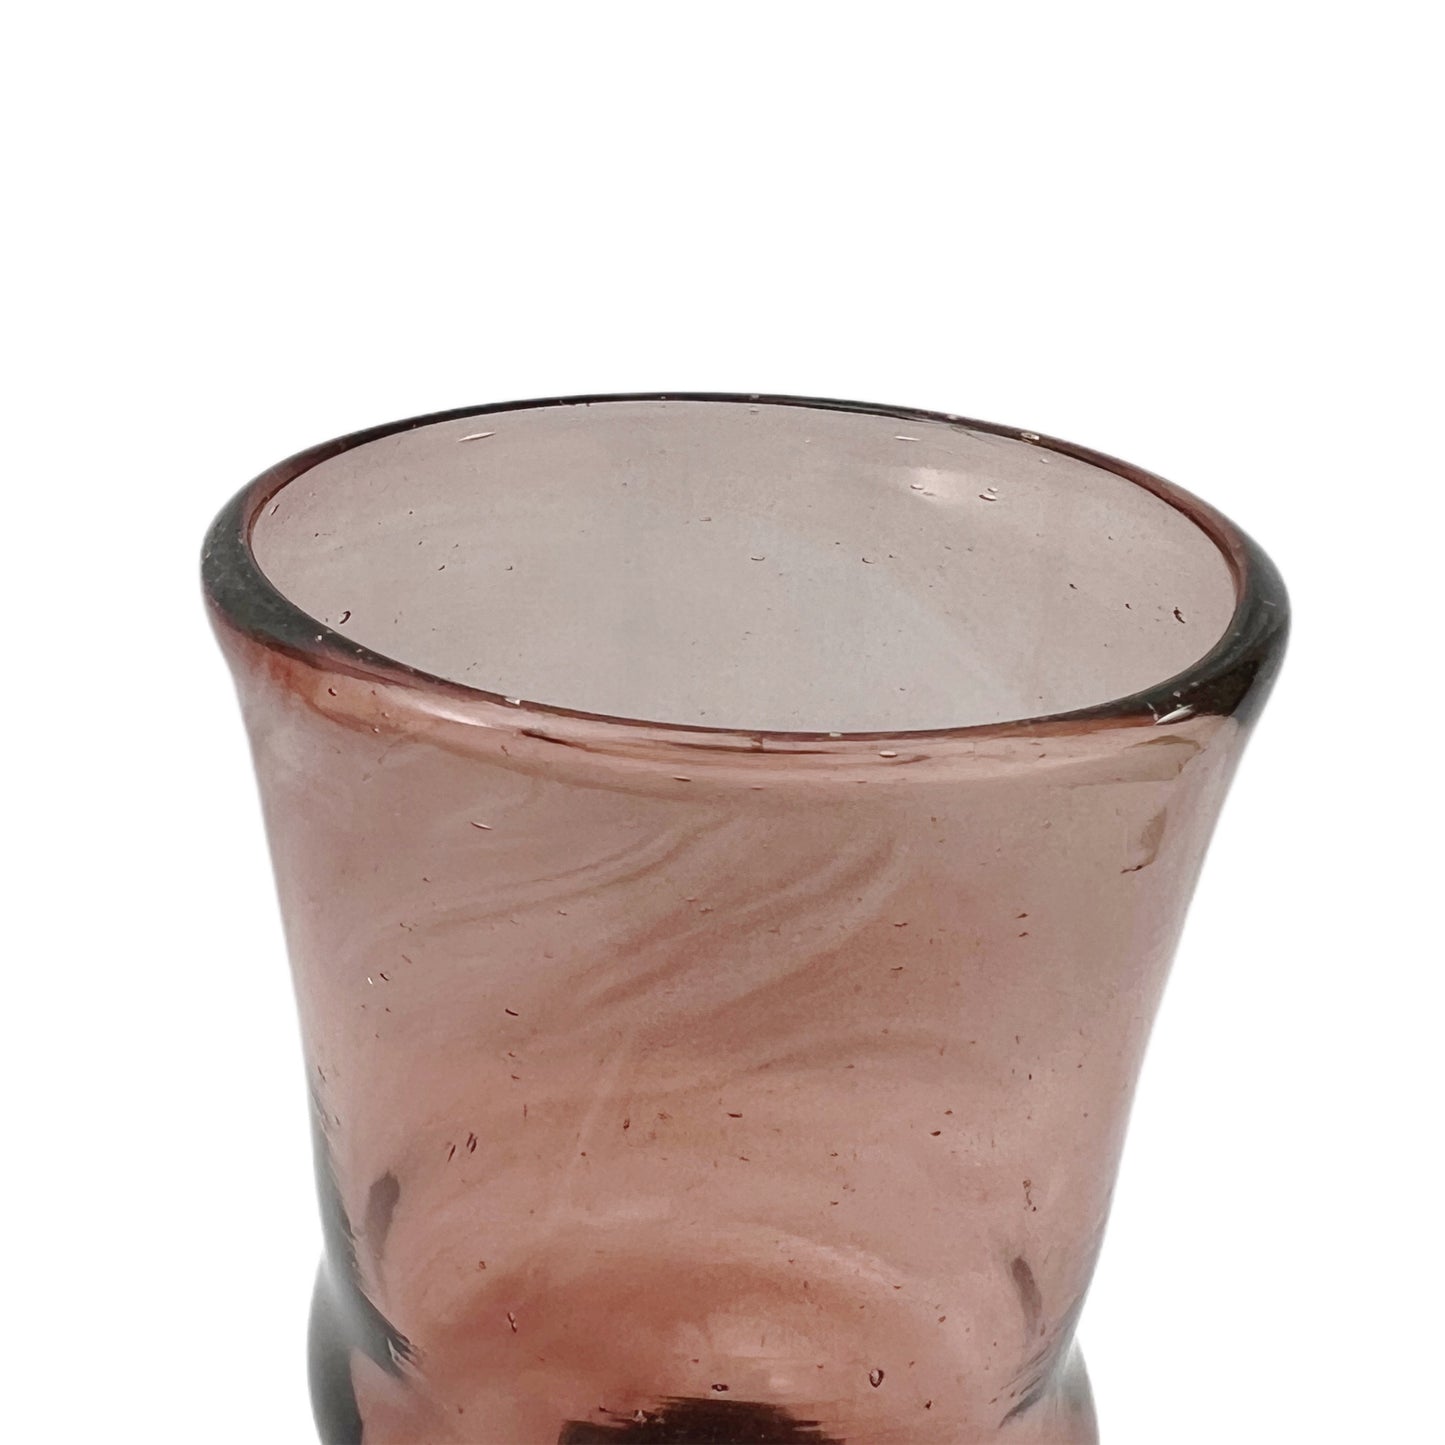 【La Soufflerie】ワイングラス White Wine Glass Framboise